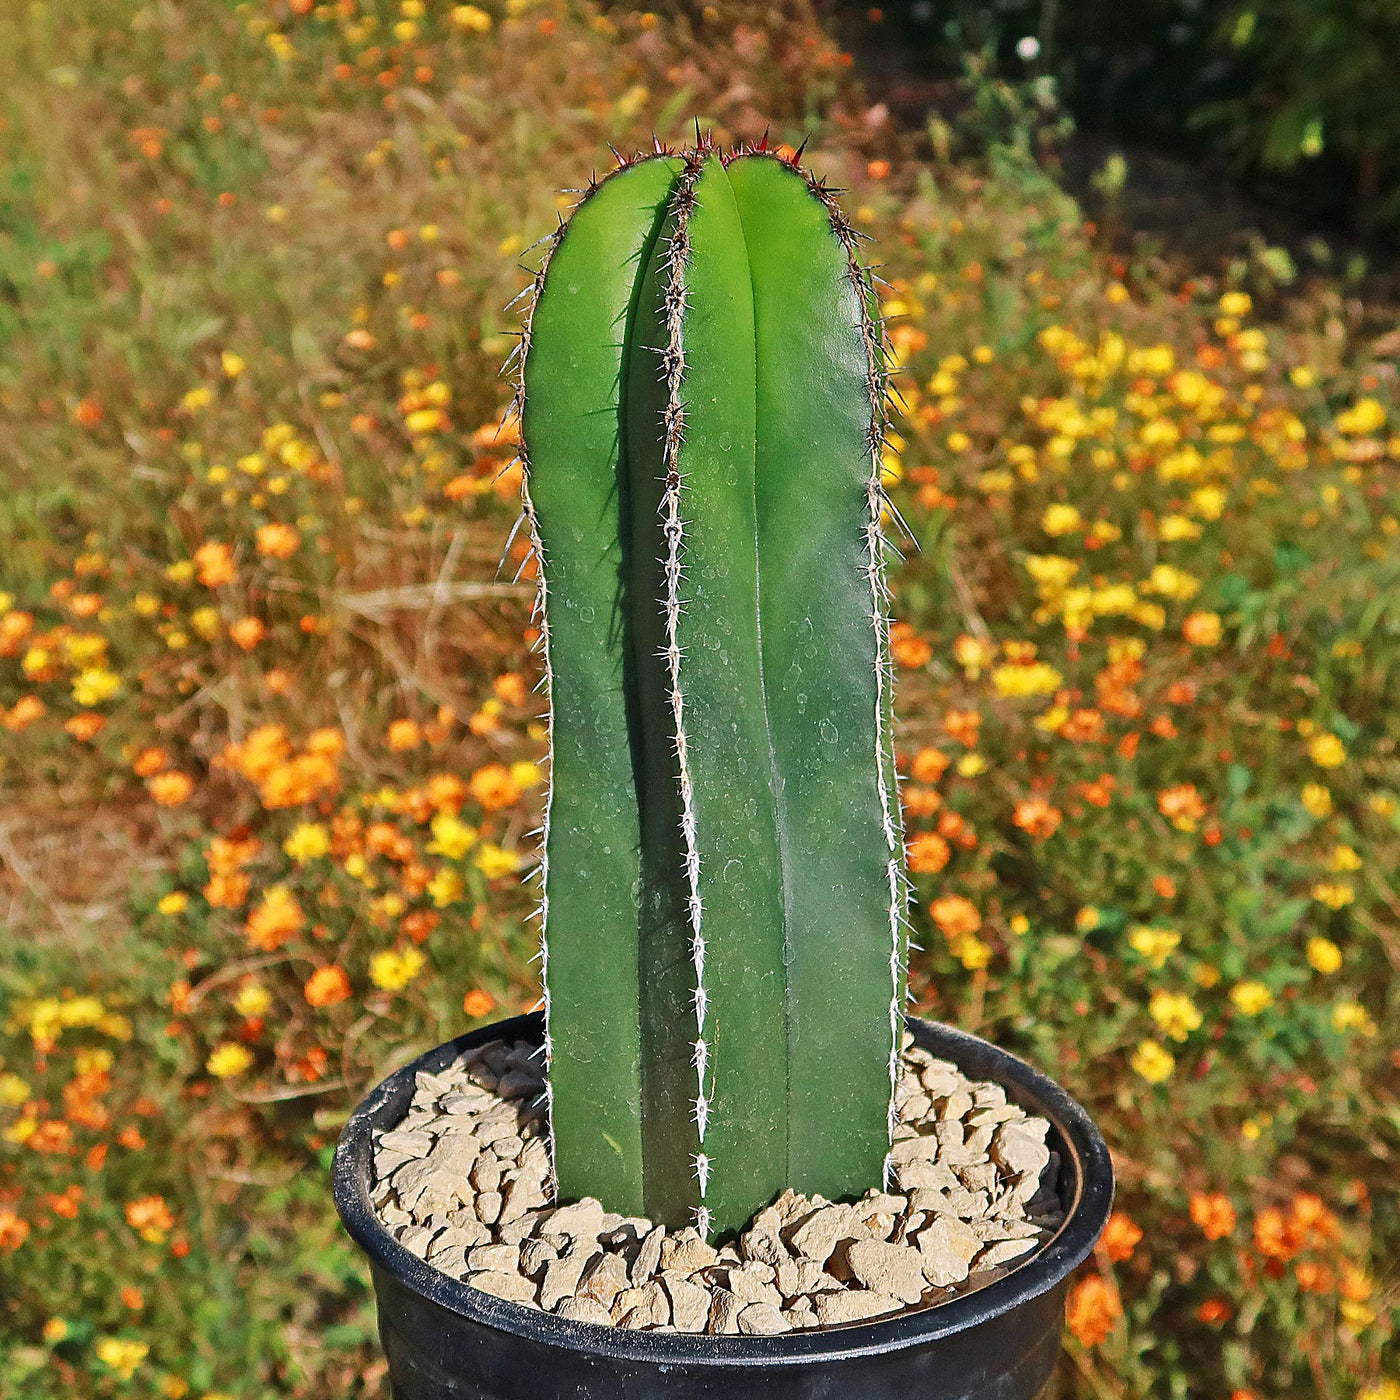 Mexican Fence Post Cactus 'Pachycereus marginatus' (15)